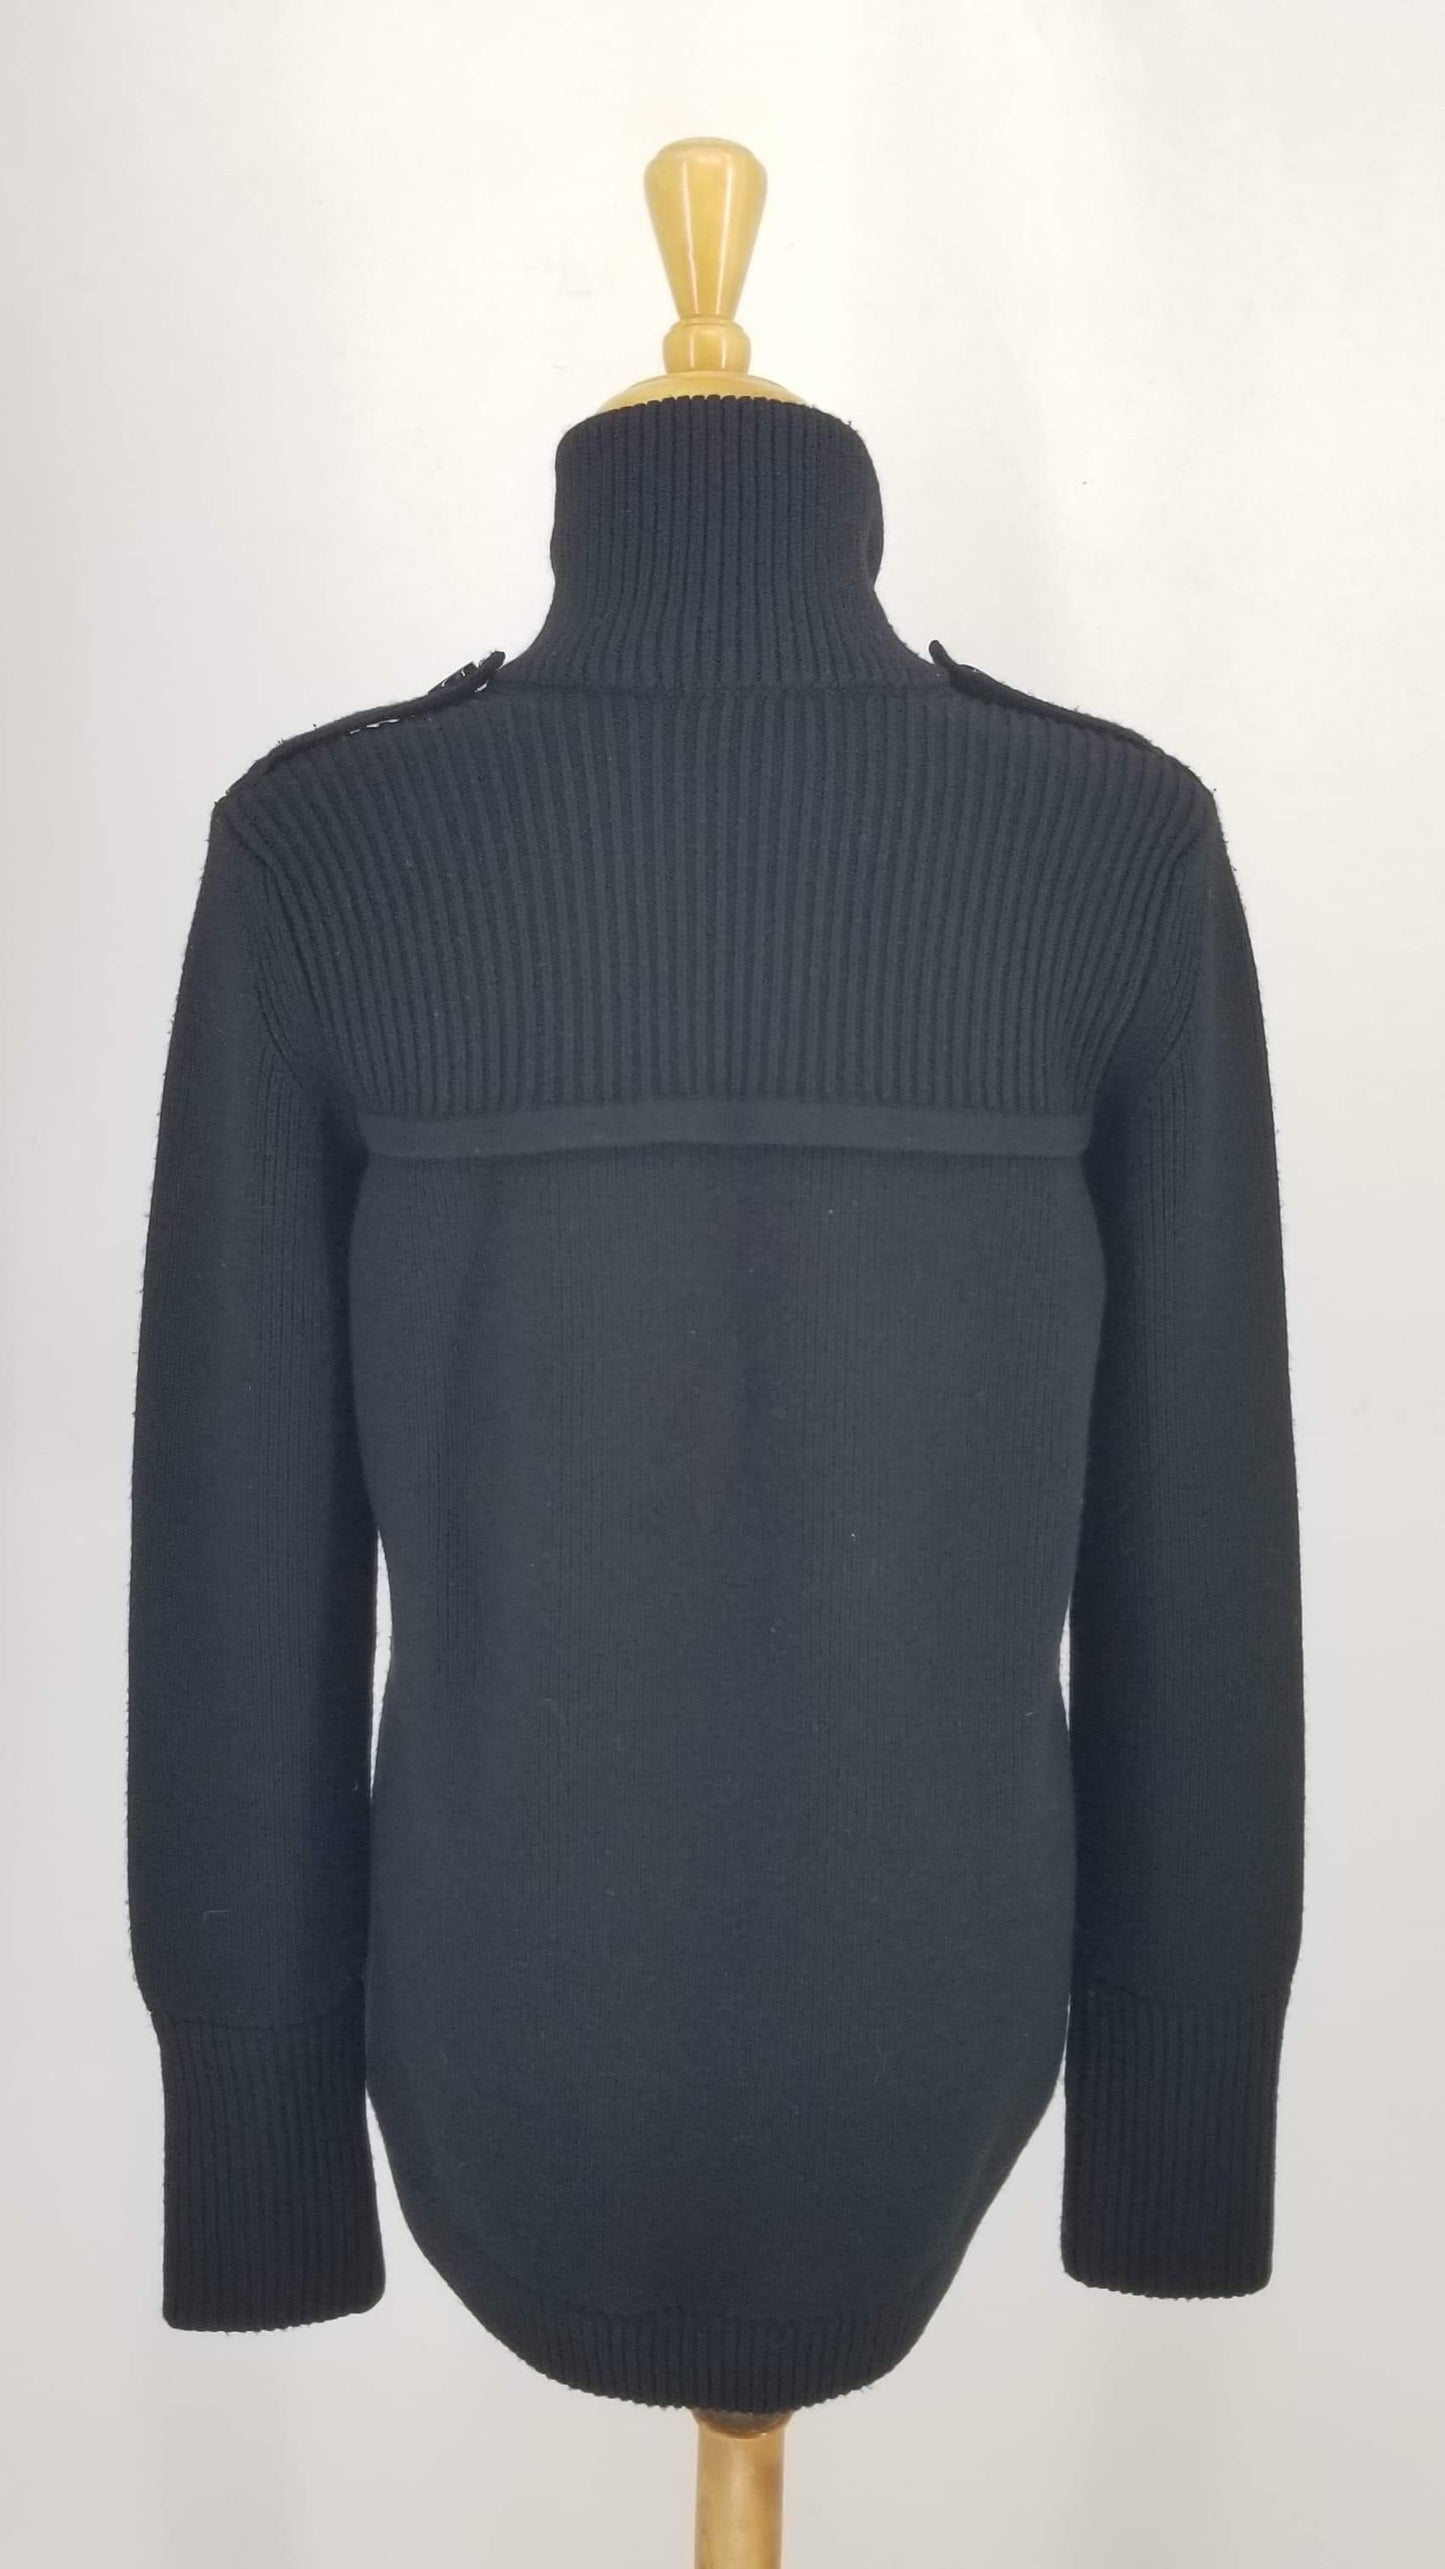 Authentic Burberry Brit Black Knit Toggle Sweater Sz XL